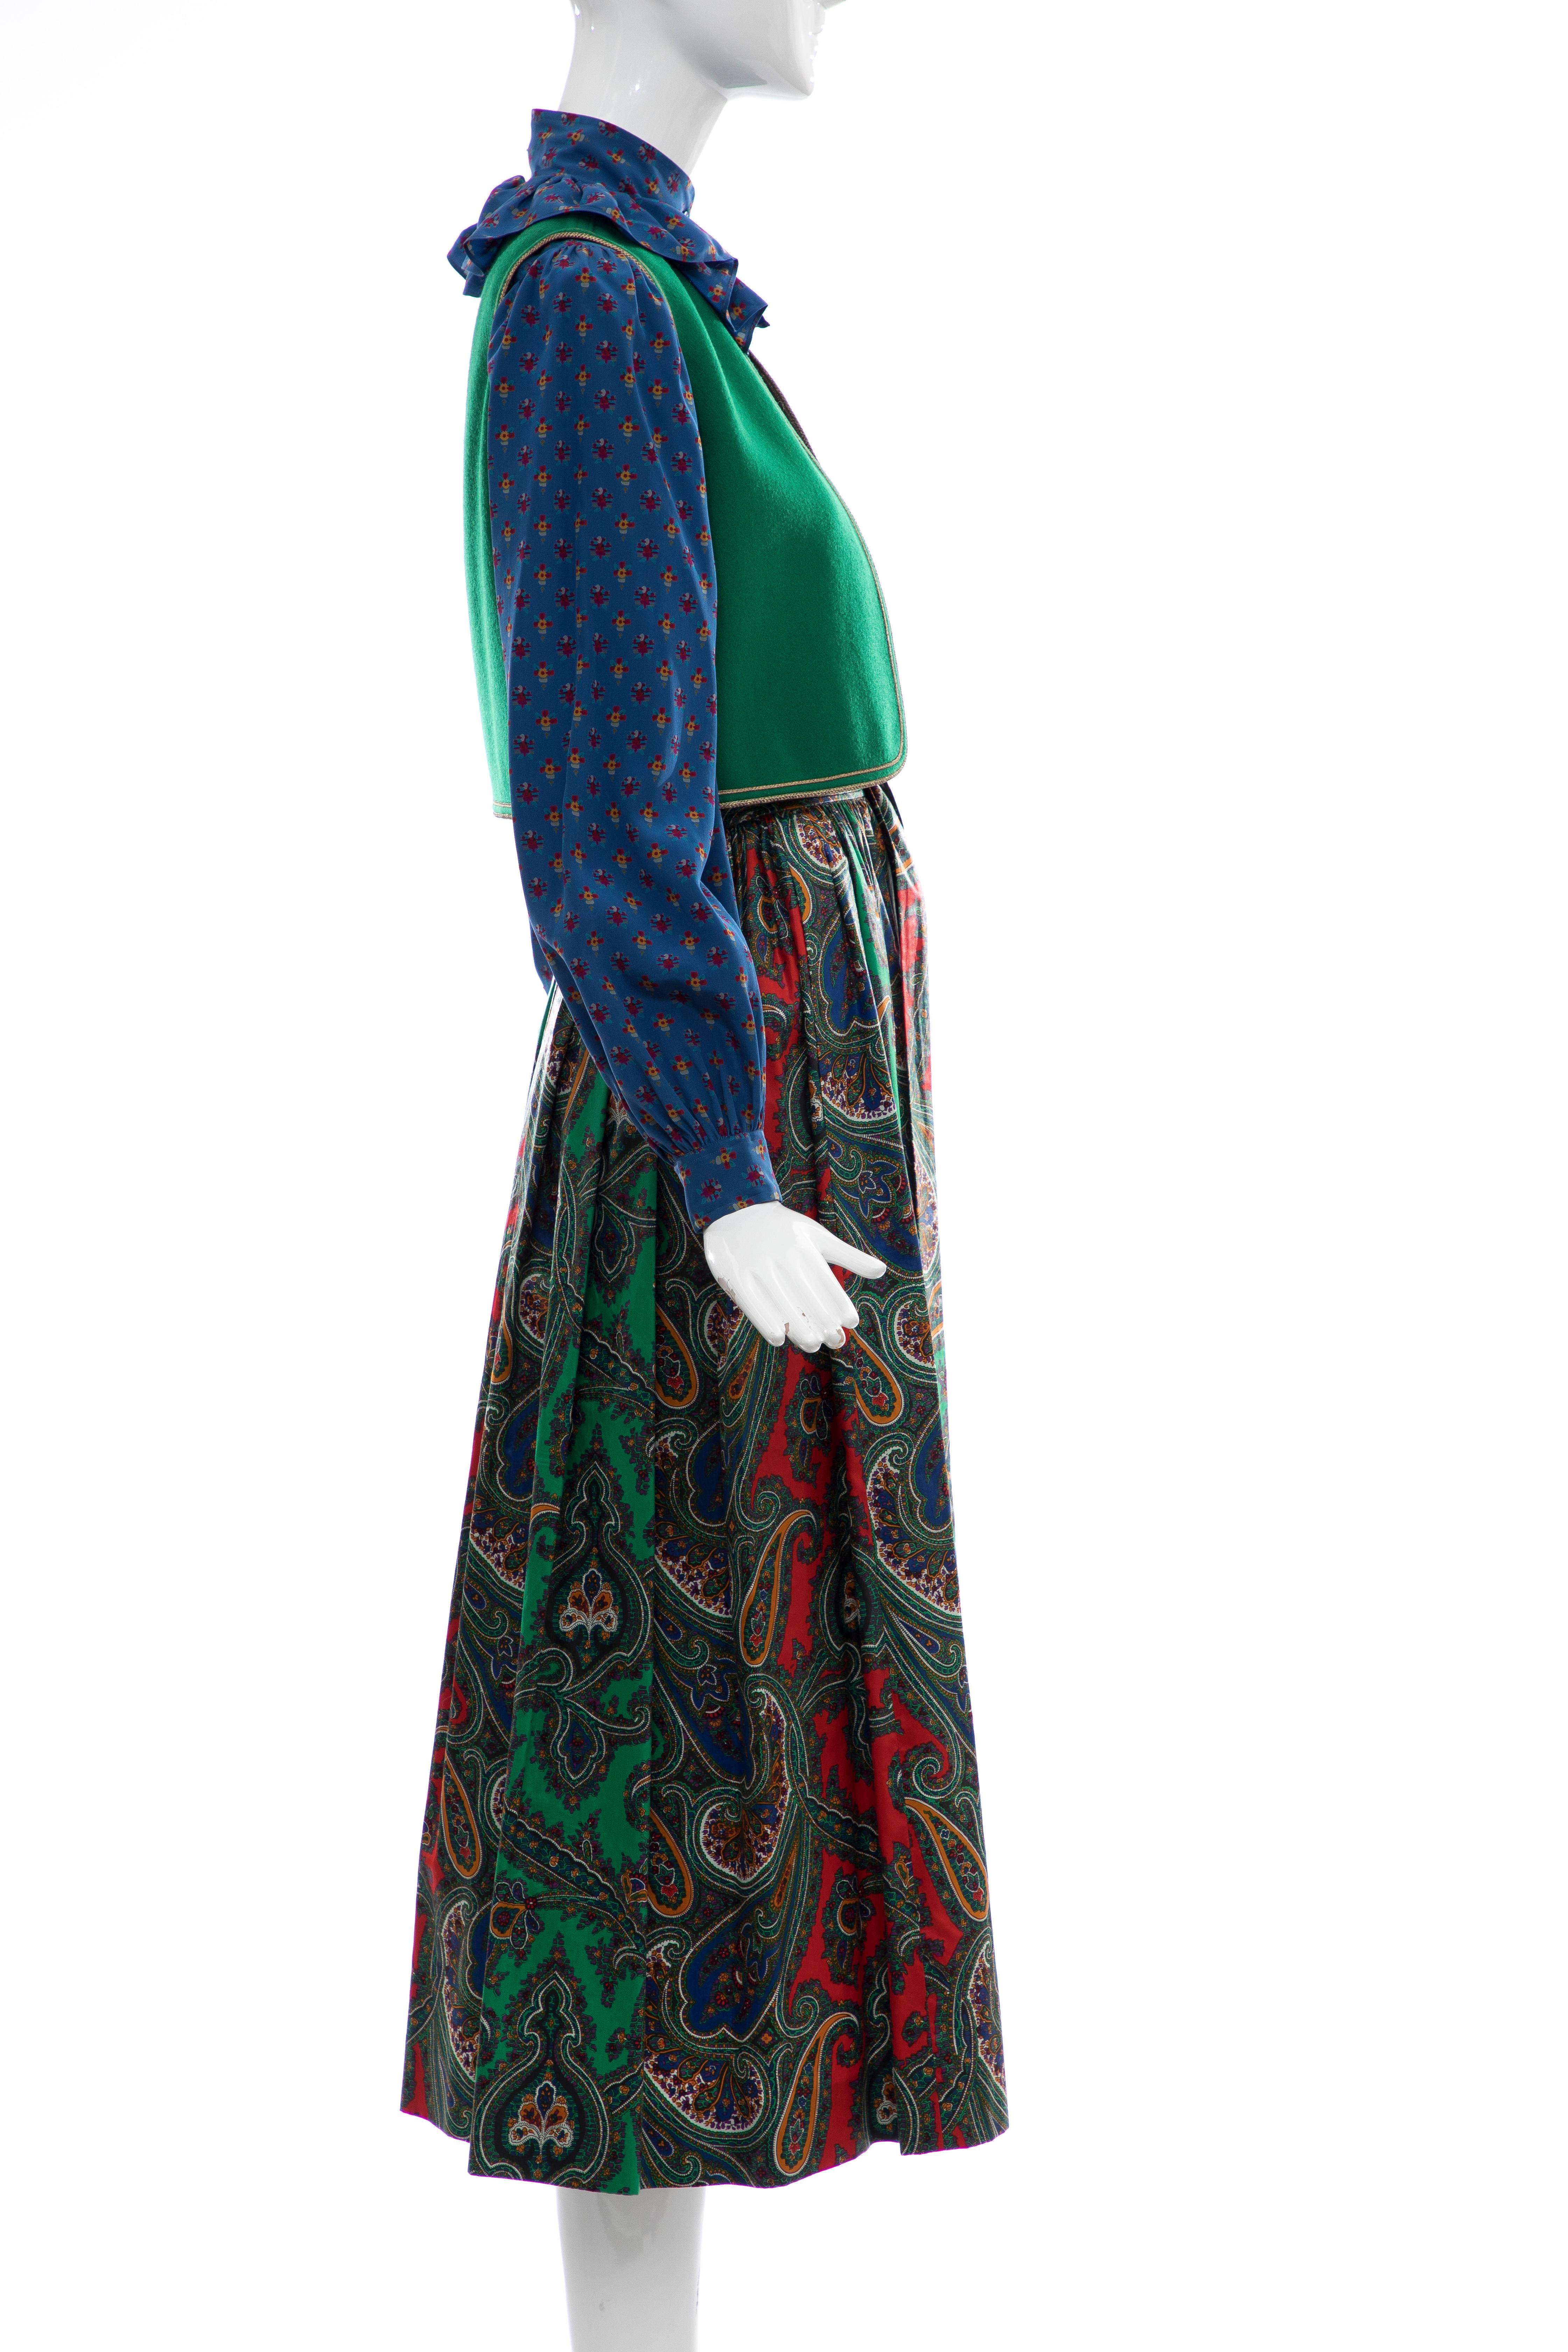 Yves Saint Laurent Rive Gauche Silk Cotton Sateen Wool Skirt Suit, Circa 1970s For Sale 2